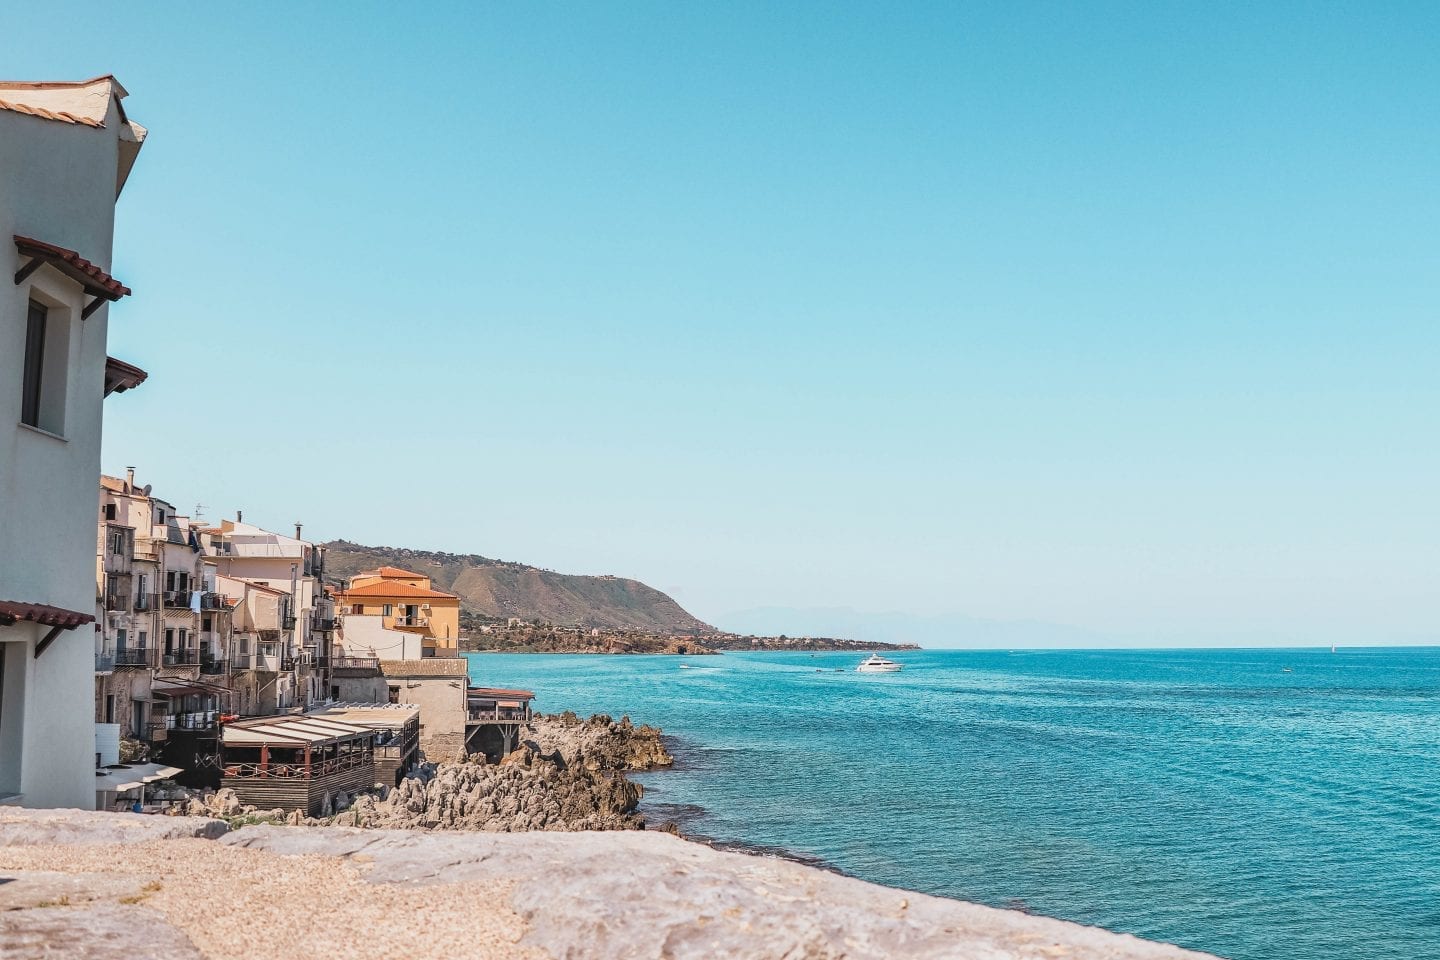 Cefalu coastline in Sicily, Italy